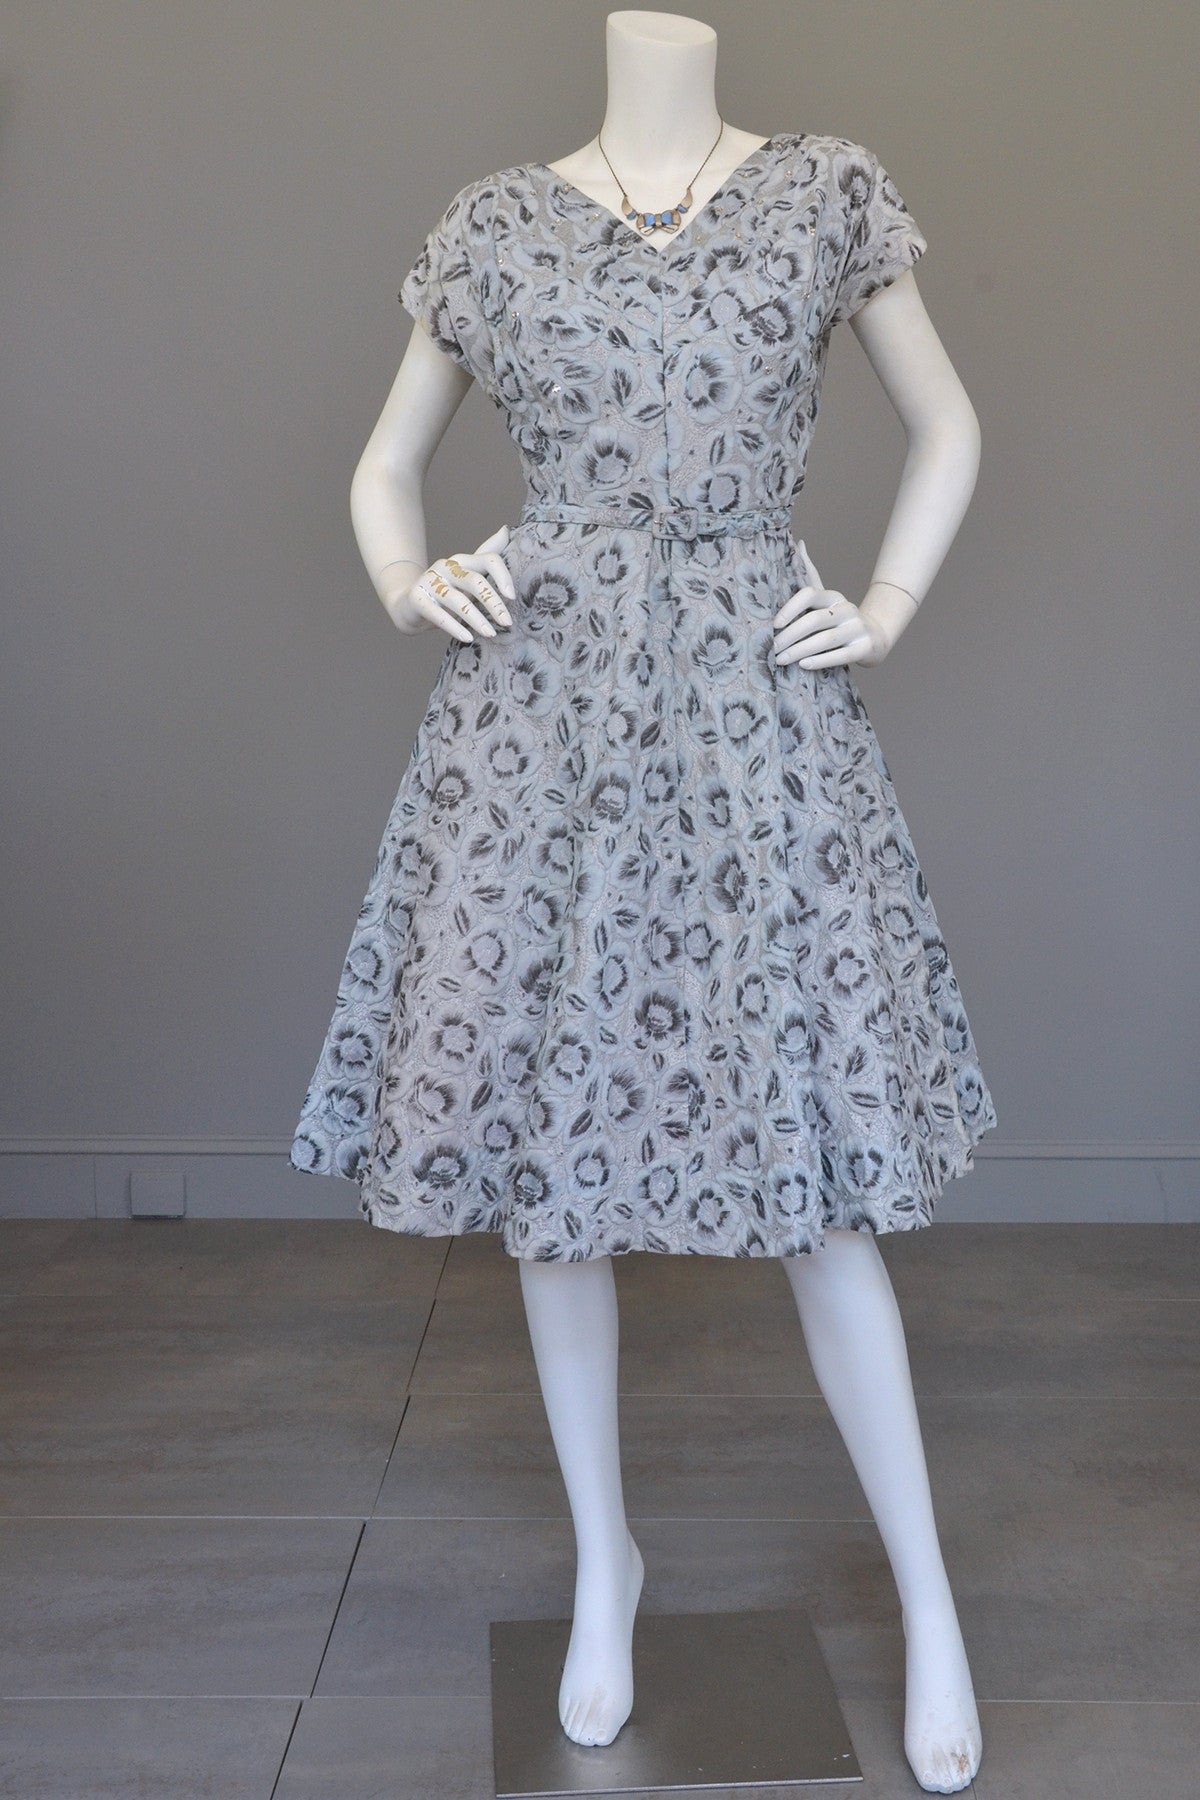 1950s Powder Blue with Rhinestone Bodice Vintage Party Dress Novelty Floral Print, Medium